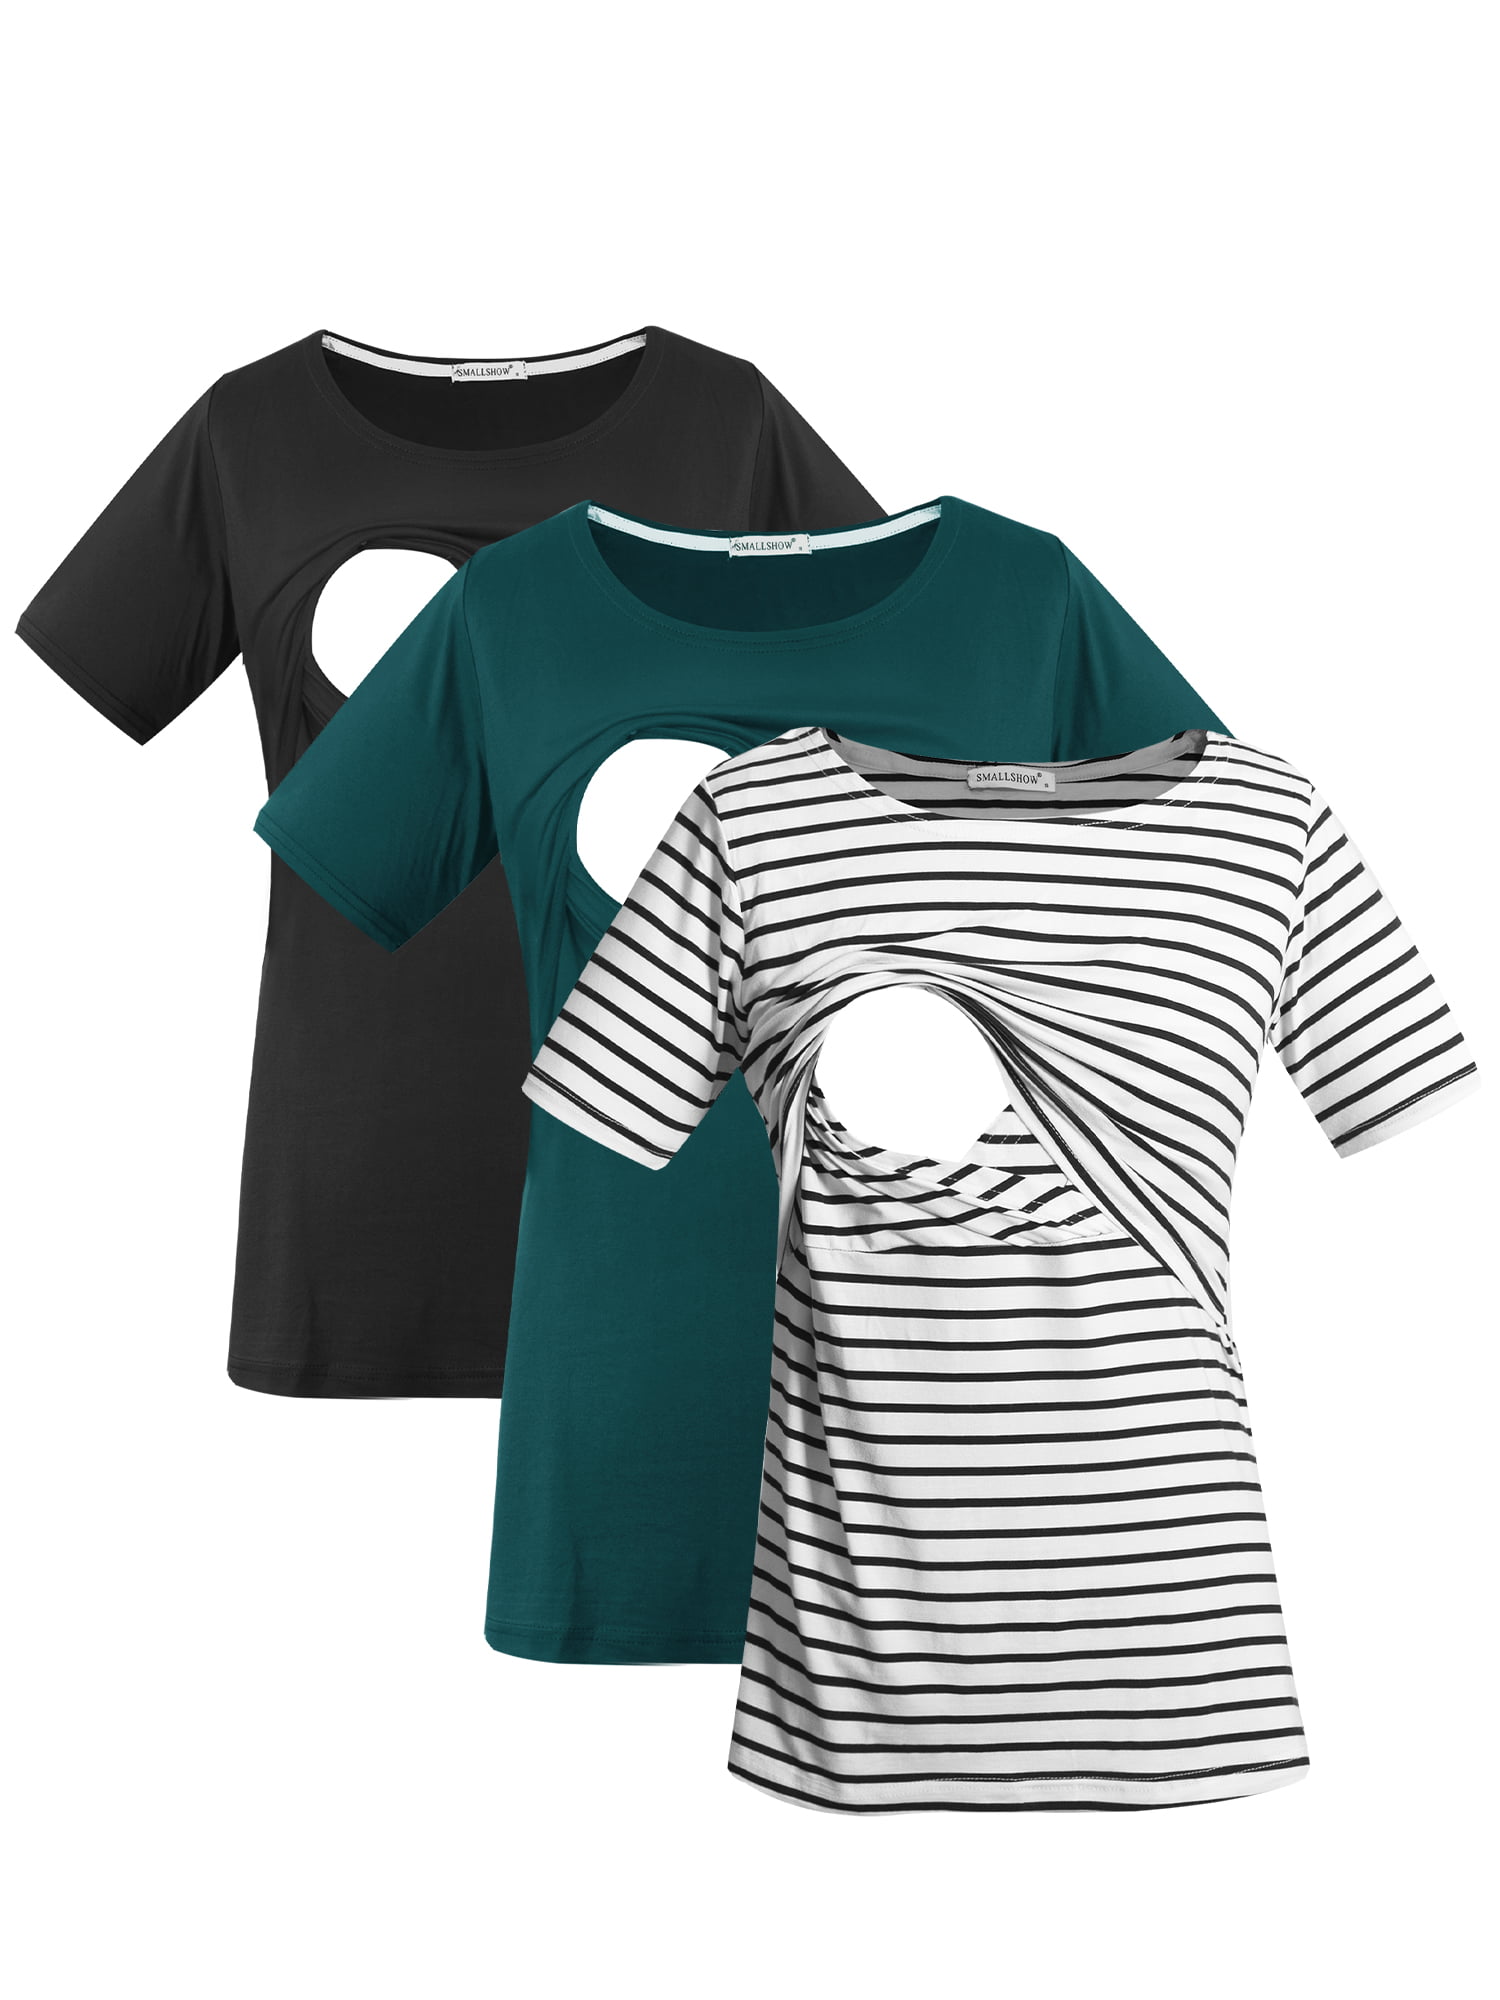 Smallshow Womens Maternity Nursing Top Short Sleeve Breastfeeding T-Shirt